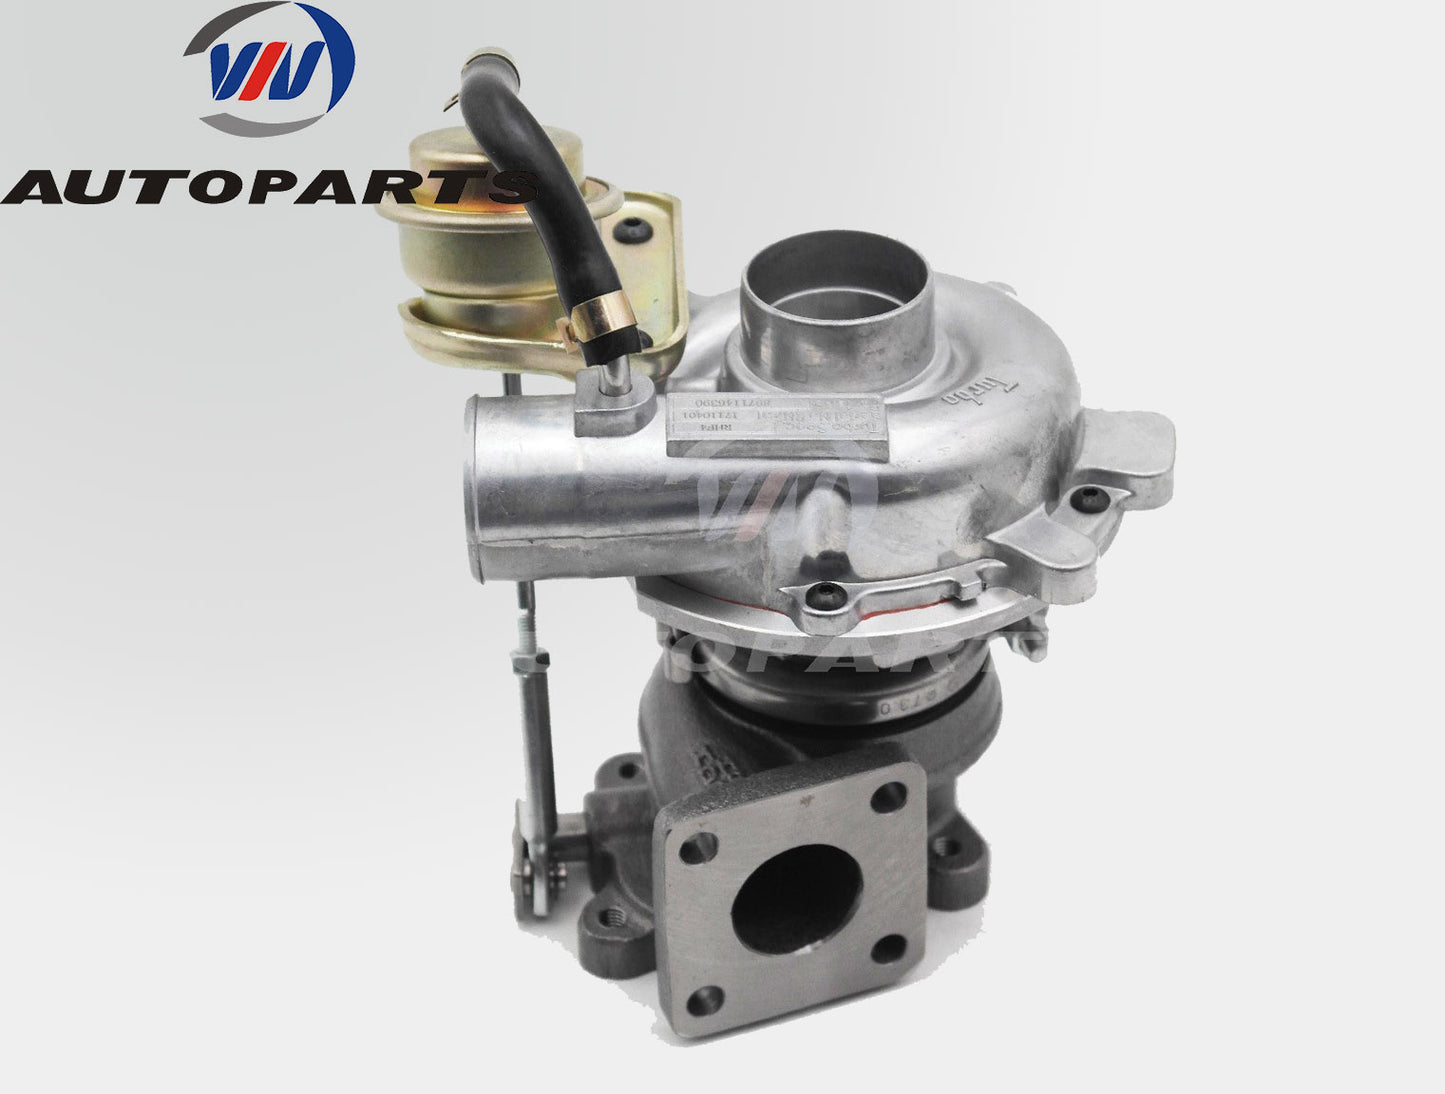 Billet in Turbocharger VB420011 for Opel Astra , Vectra 1.7L Diesel Engine